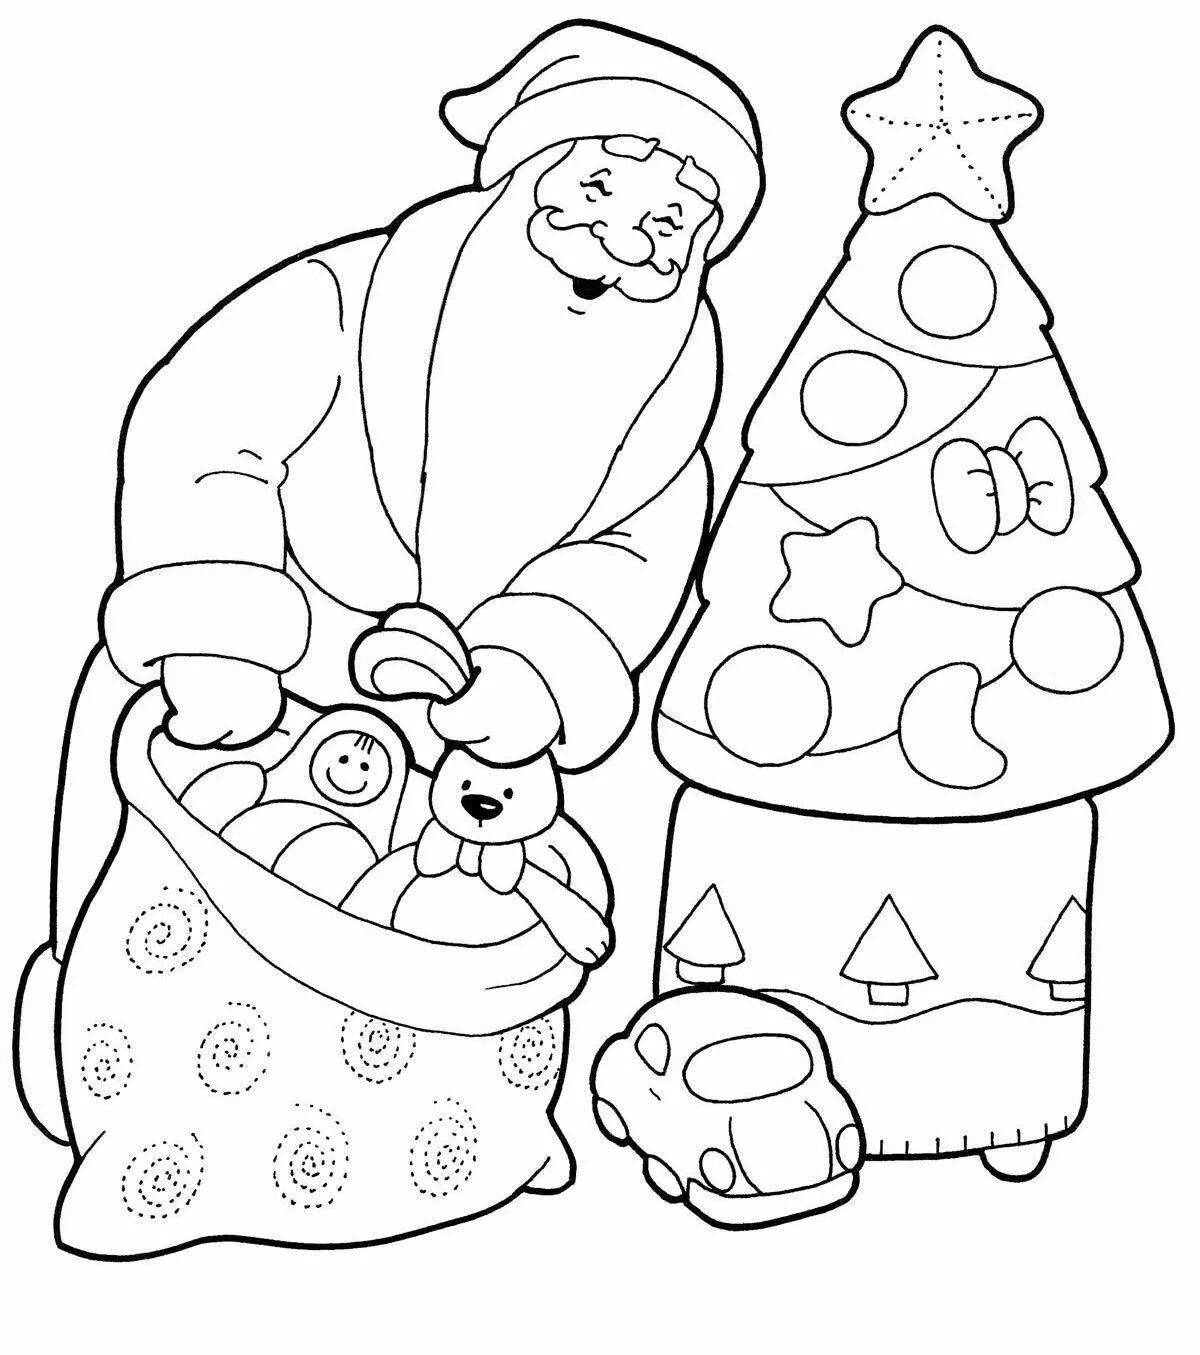 Shining santa claus coloring book for kids